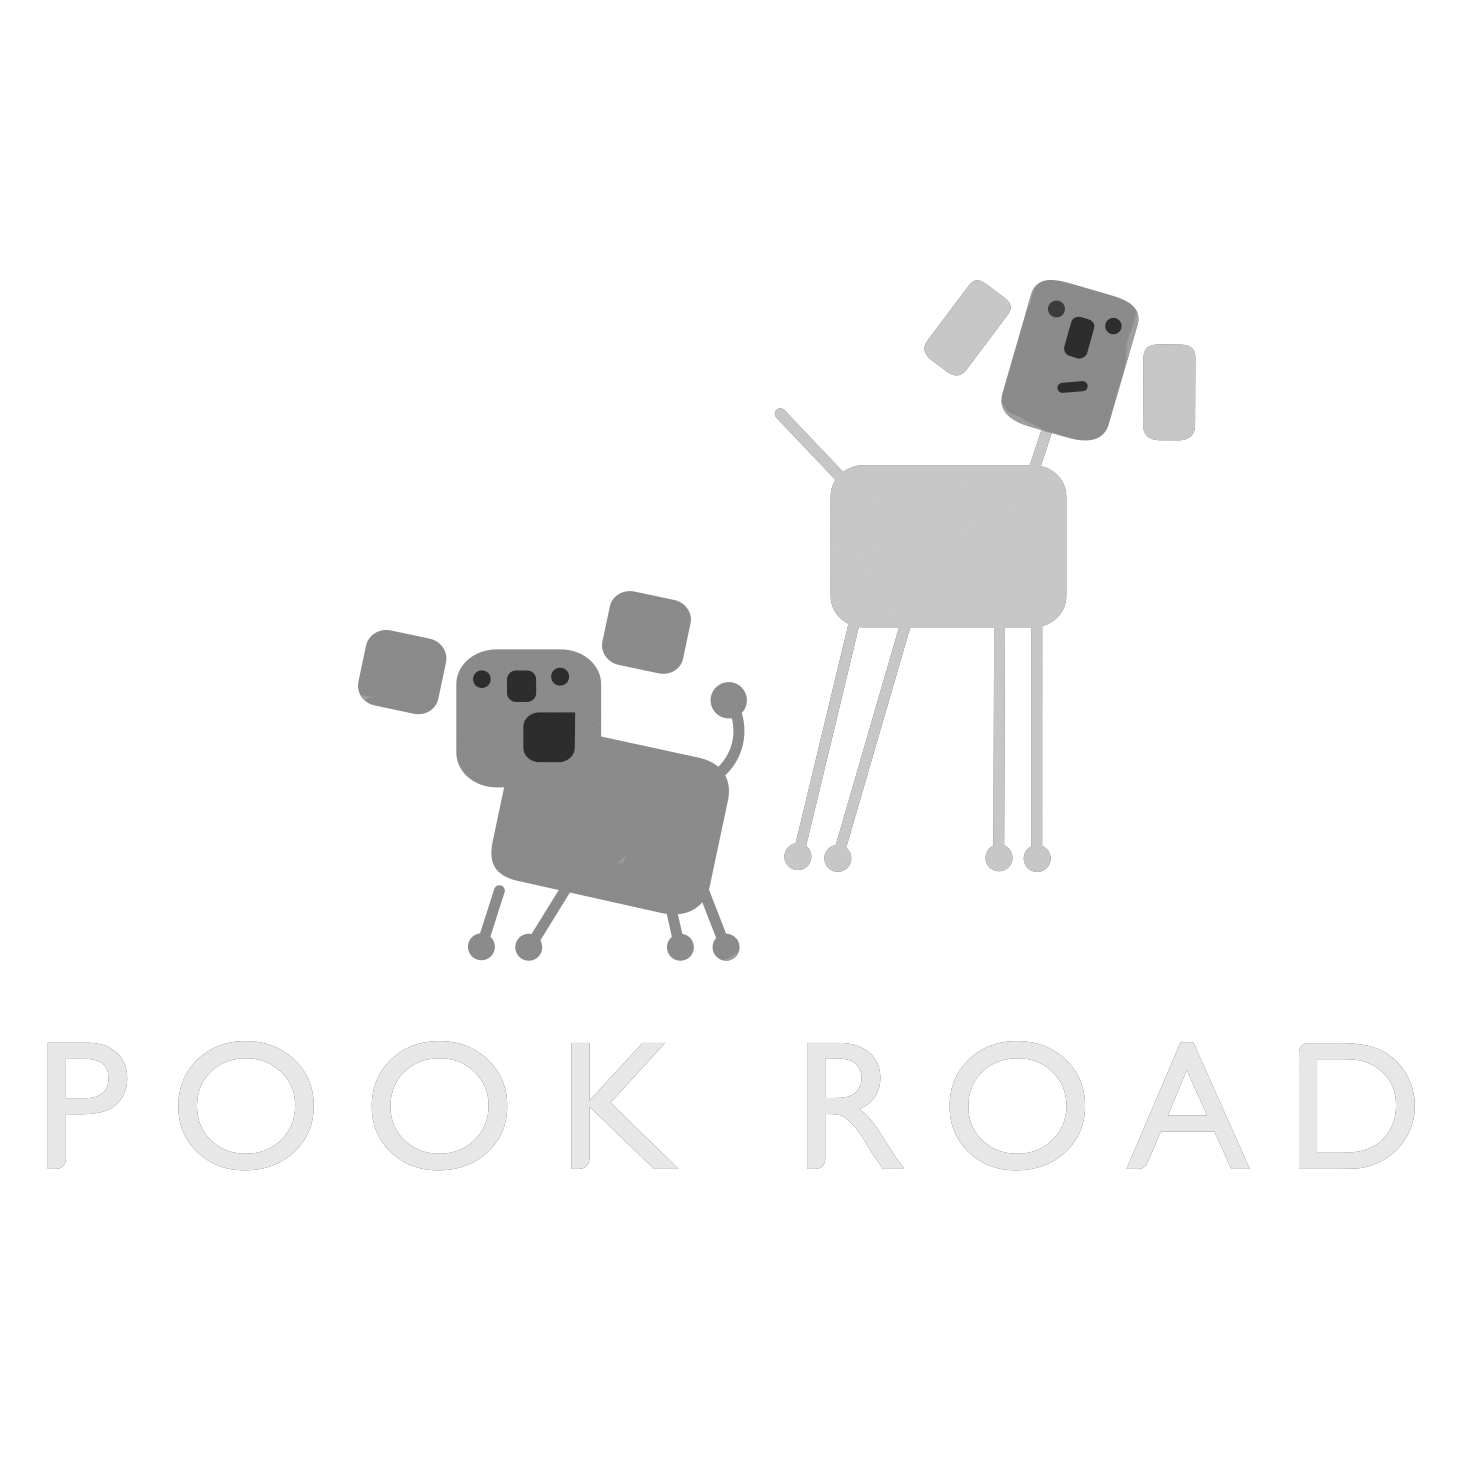 Pook Road logo-Rev 1.png